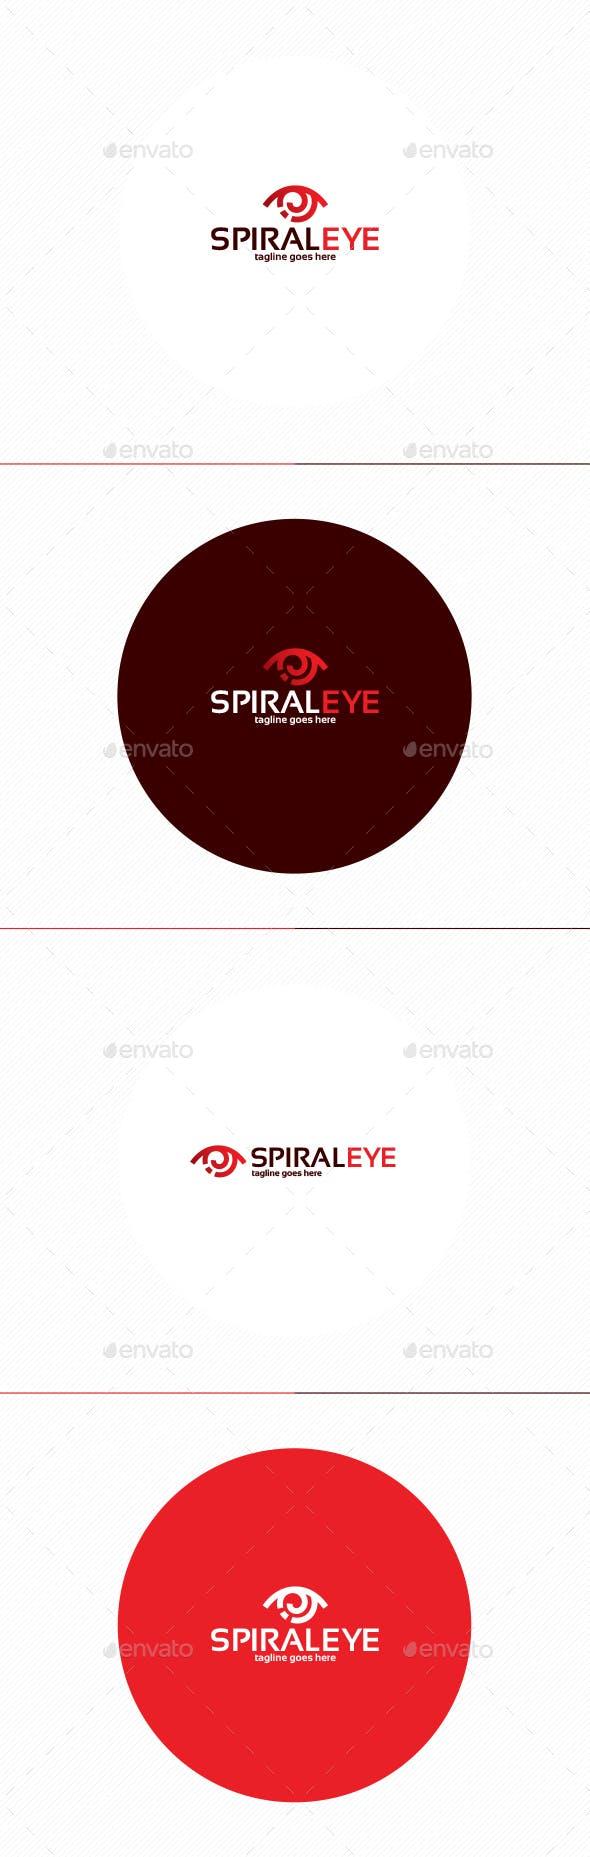 Eye Ball Spiral Logo - Spiral Eye Logo by shaoleen | GraphicRiver